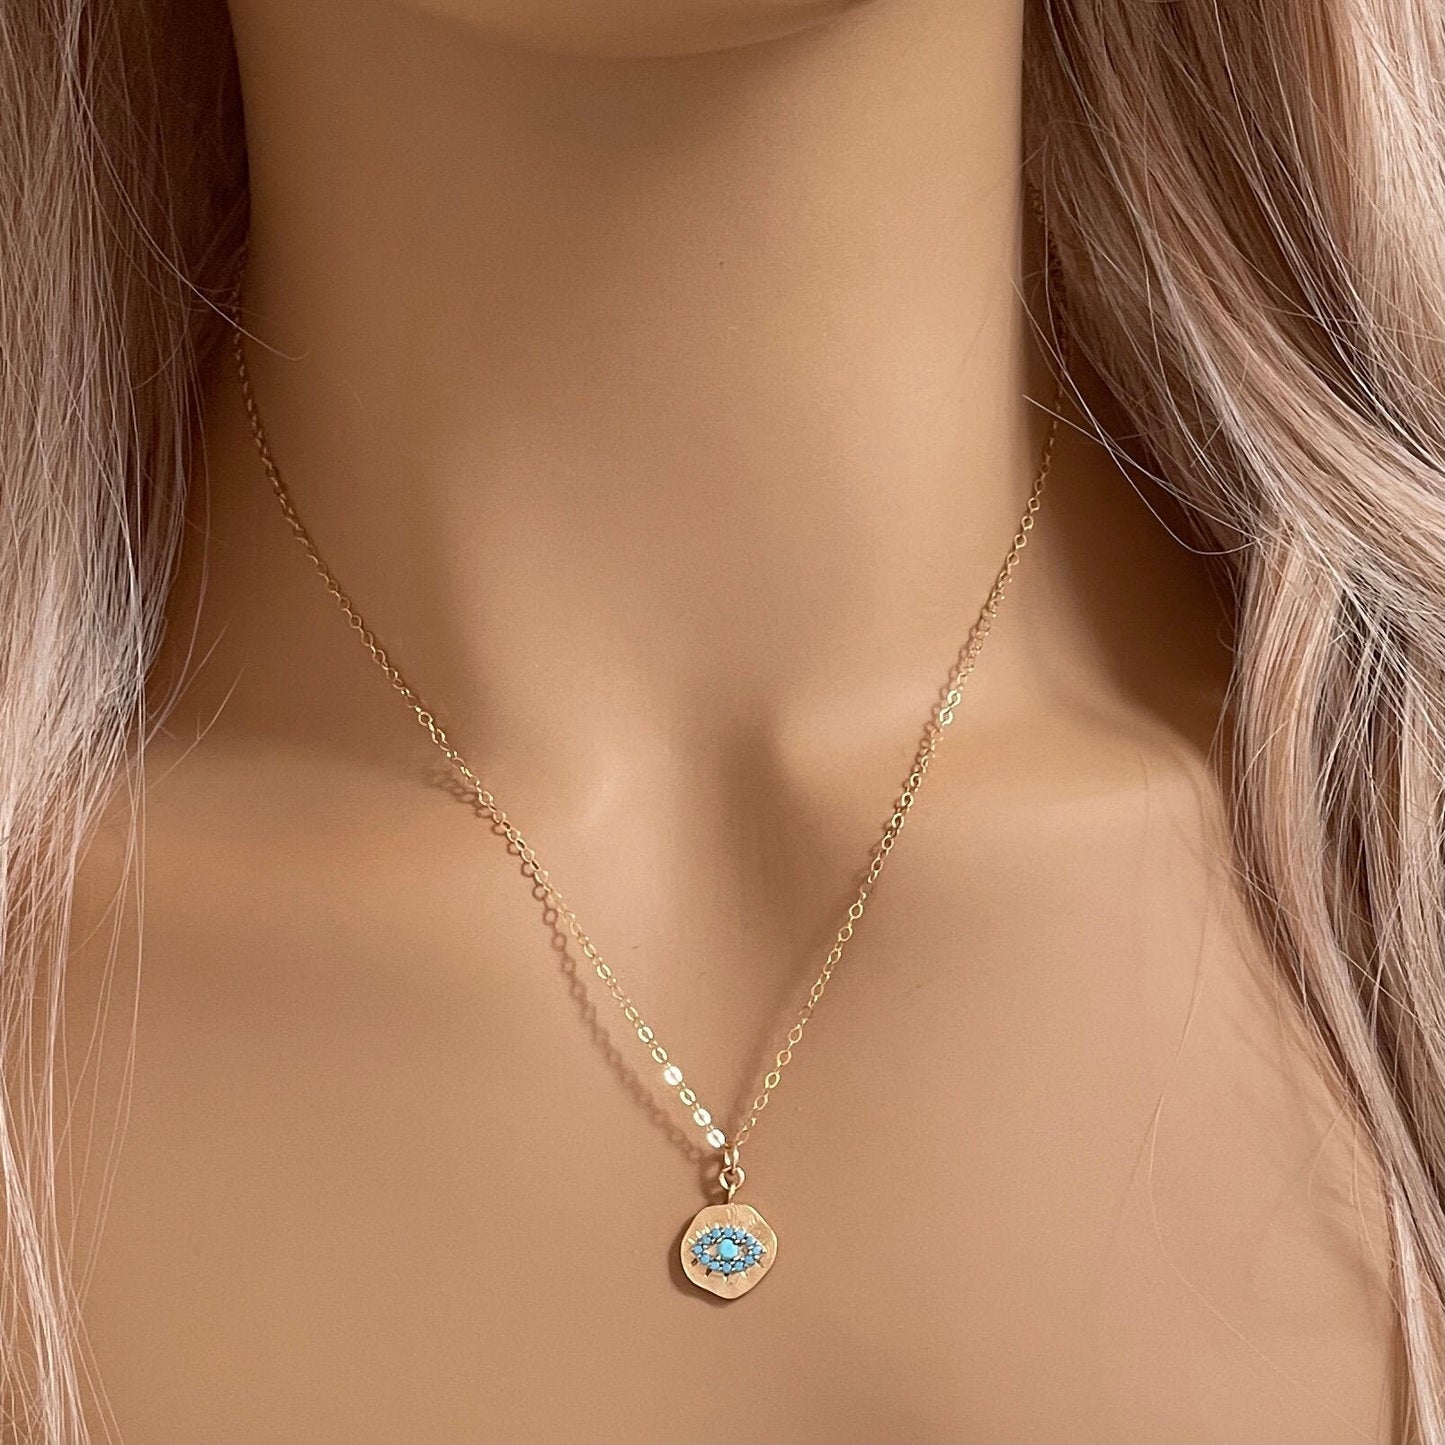 Gold Evil Eye Necklace - Turquoise Eye Charm Necklace